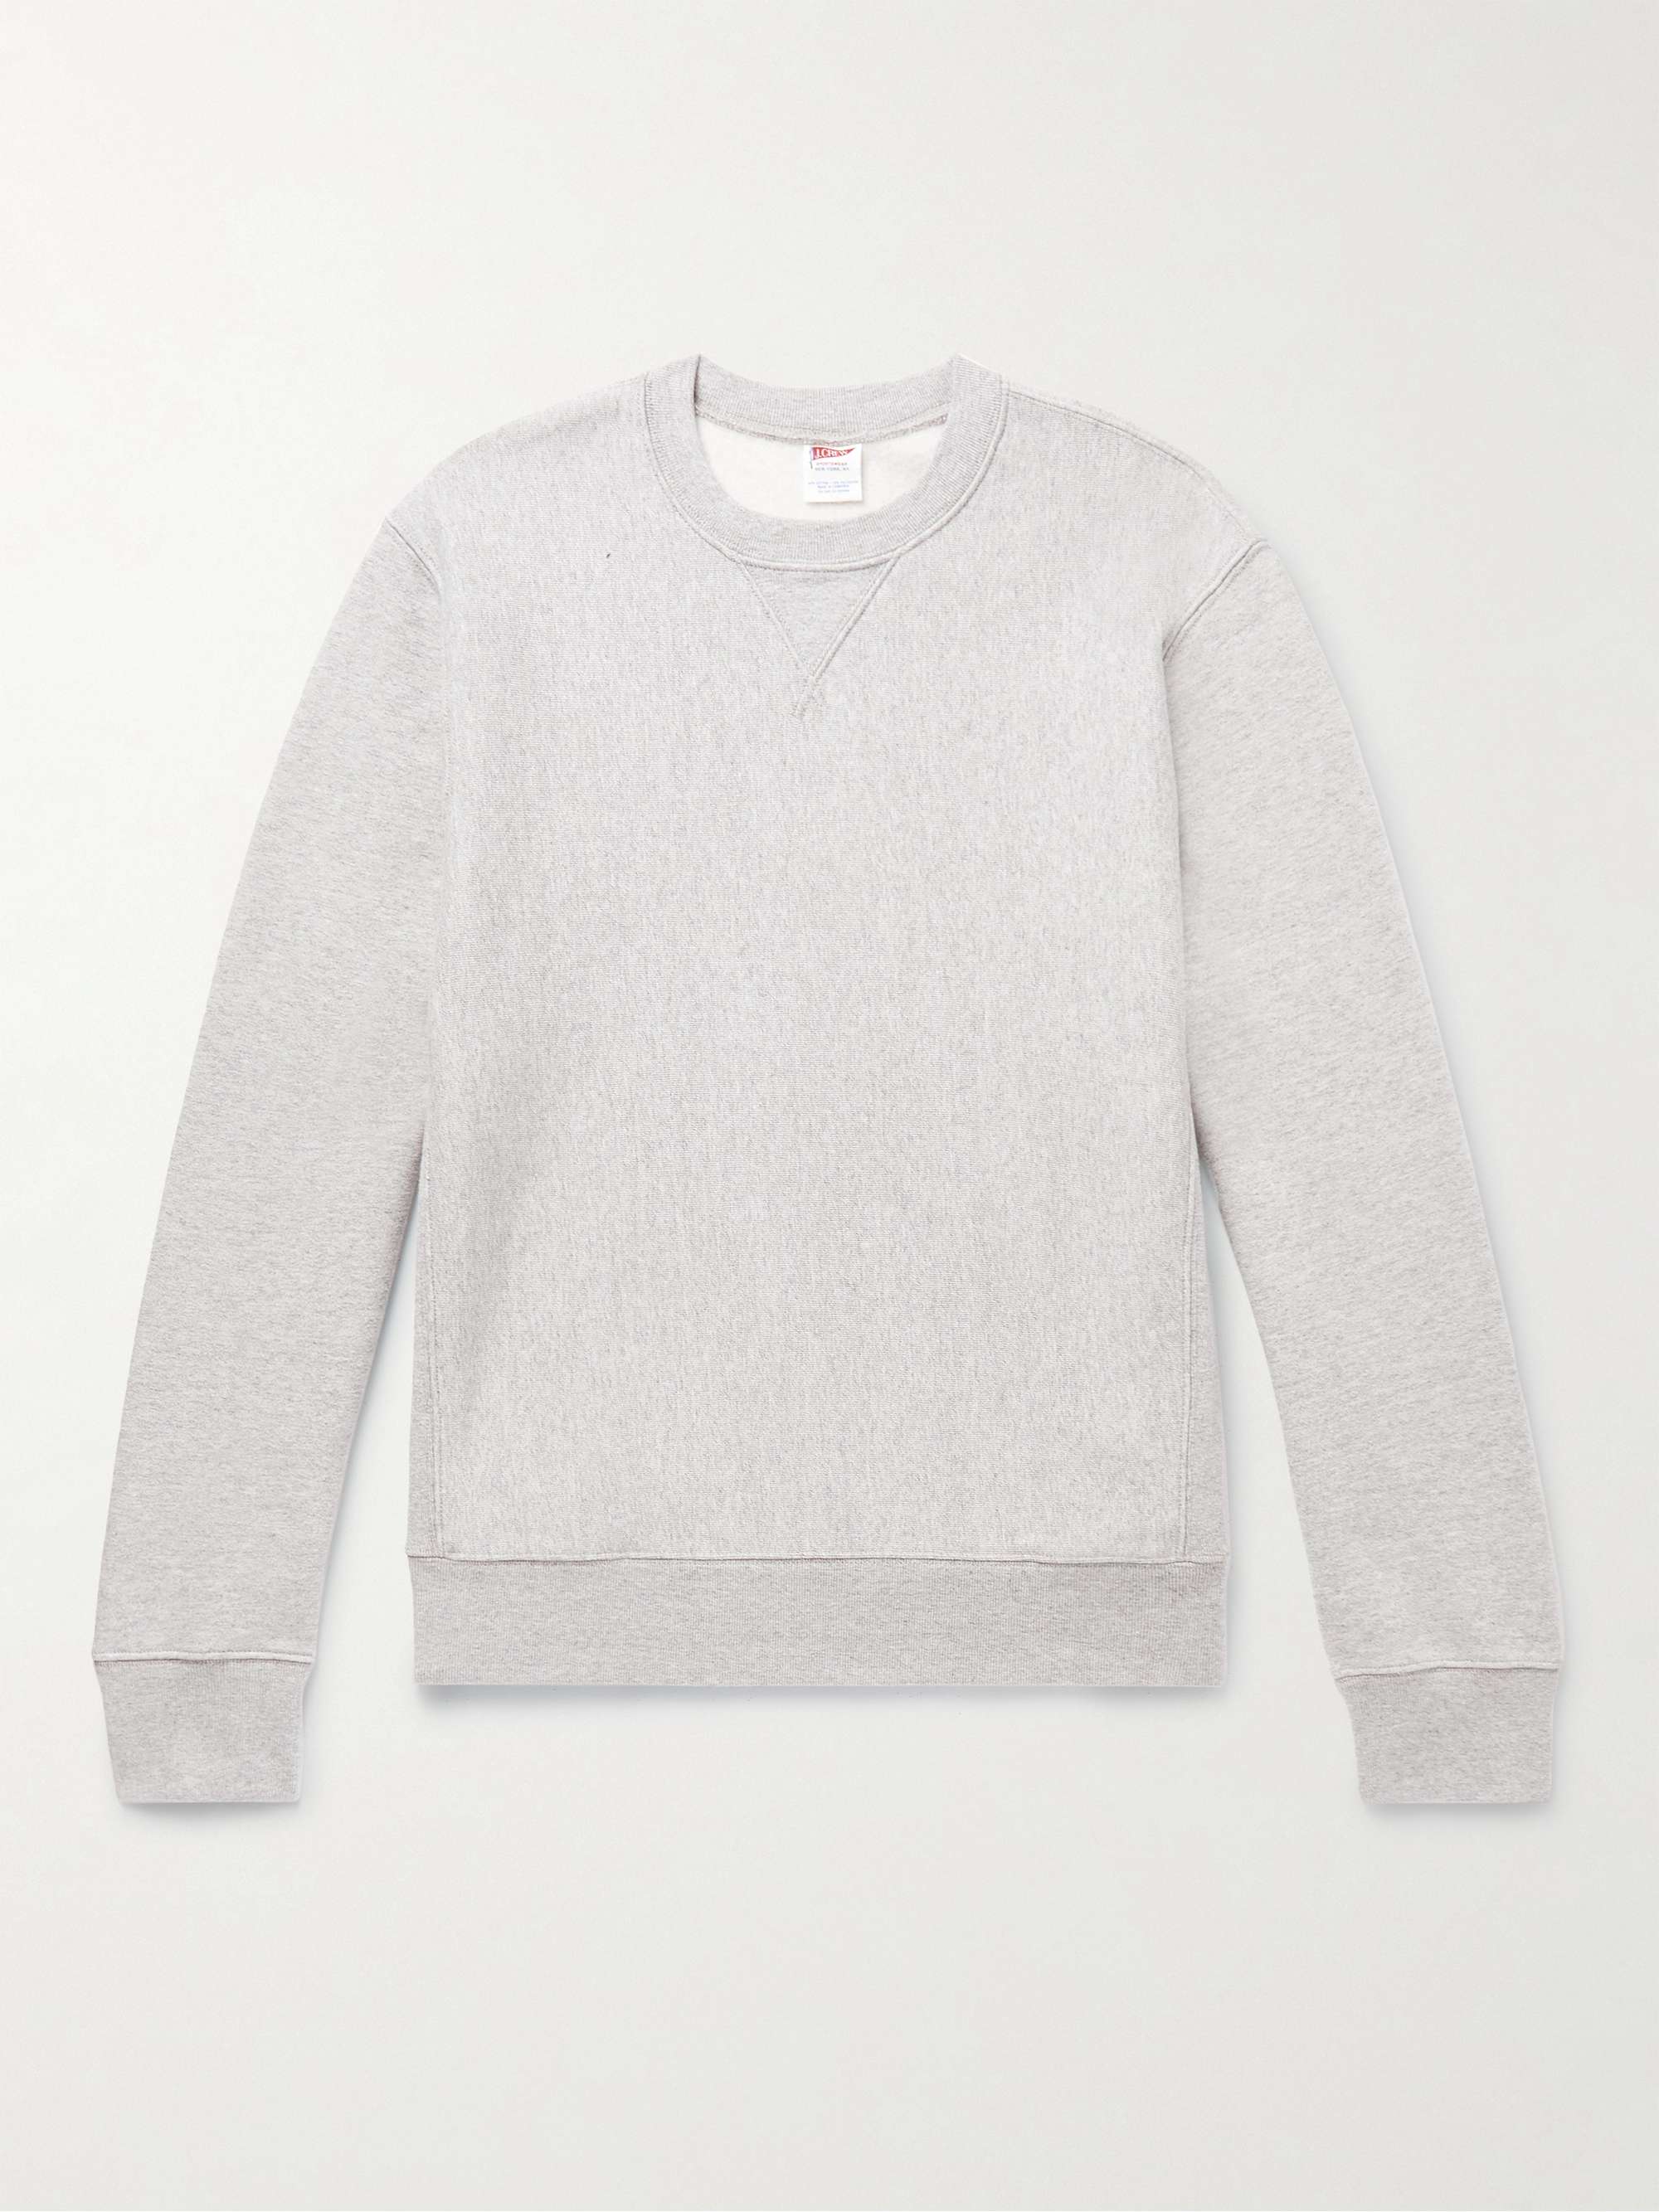 J.CREW Cotton-Blend Jersey Sweatshirt for Men | MR PORTER